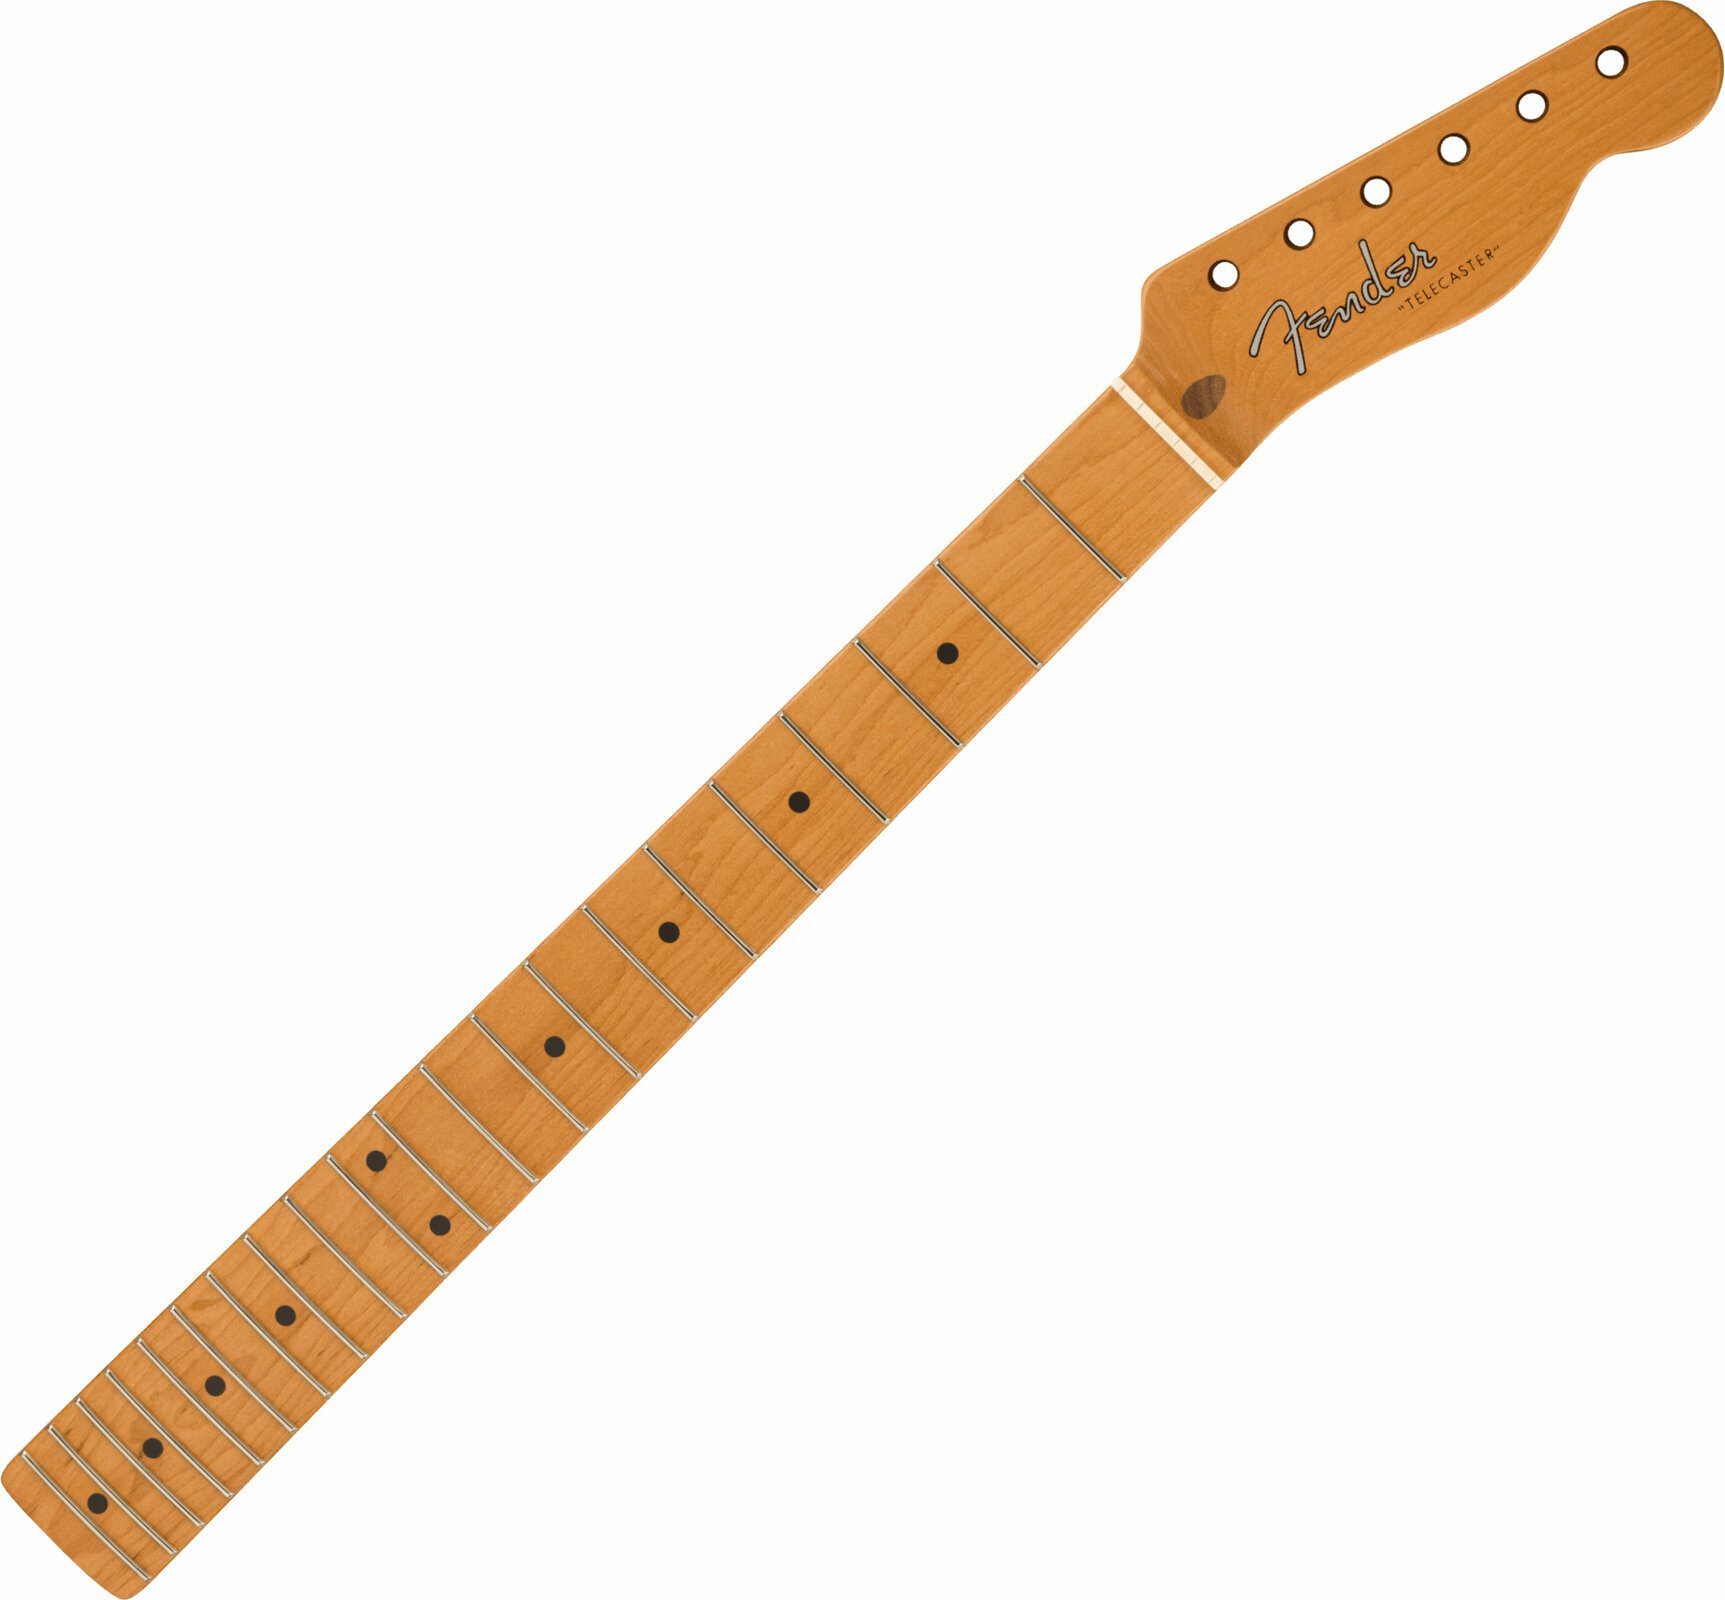 Hals für Gitarre Fender Limited Edition 1952 Telecaster Roasted Maple Neck 21 6105 Frets 9.5" Radius "U" Shape 21 Bergahorn (Roasted Maple) Hals für Gitarre